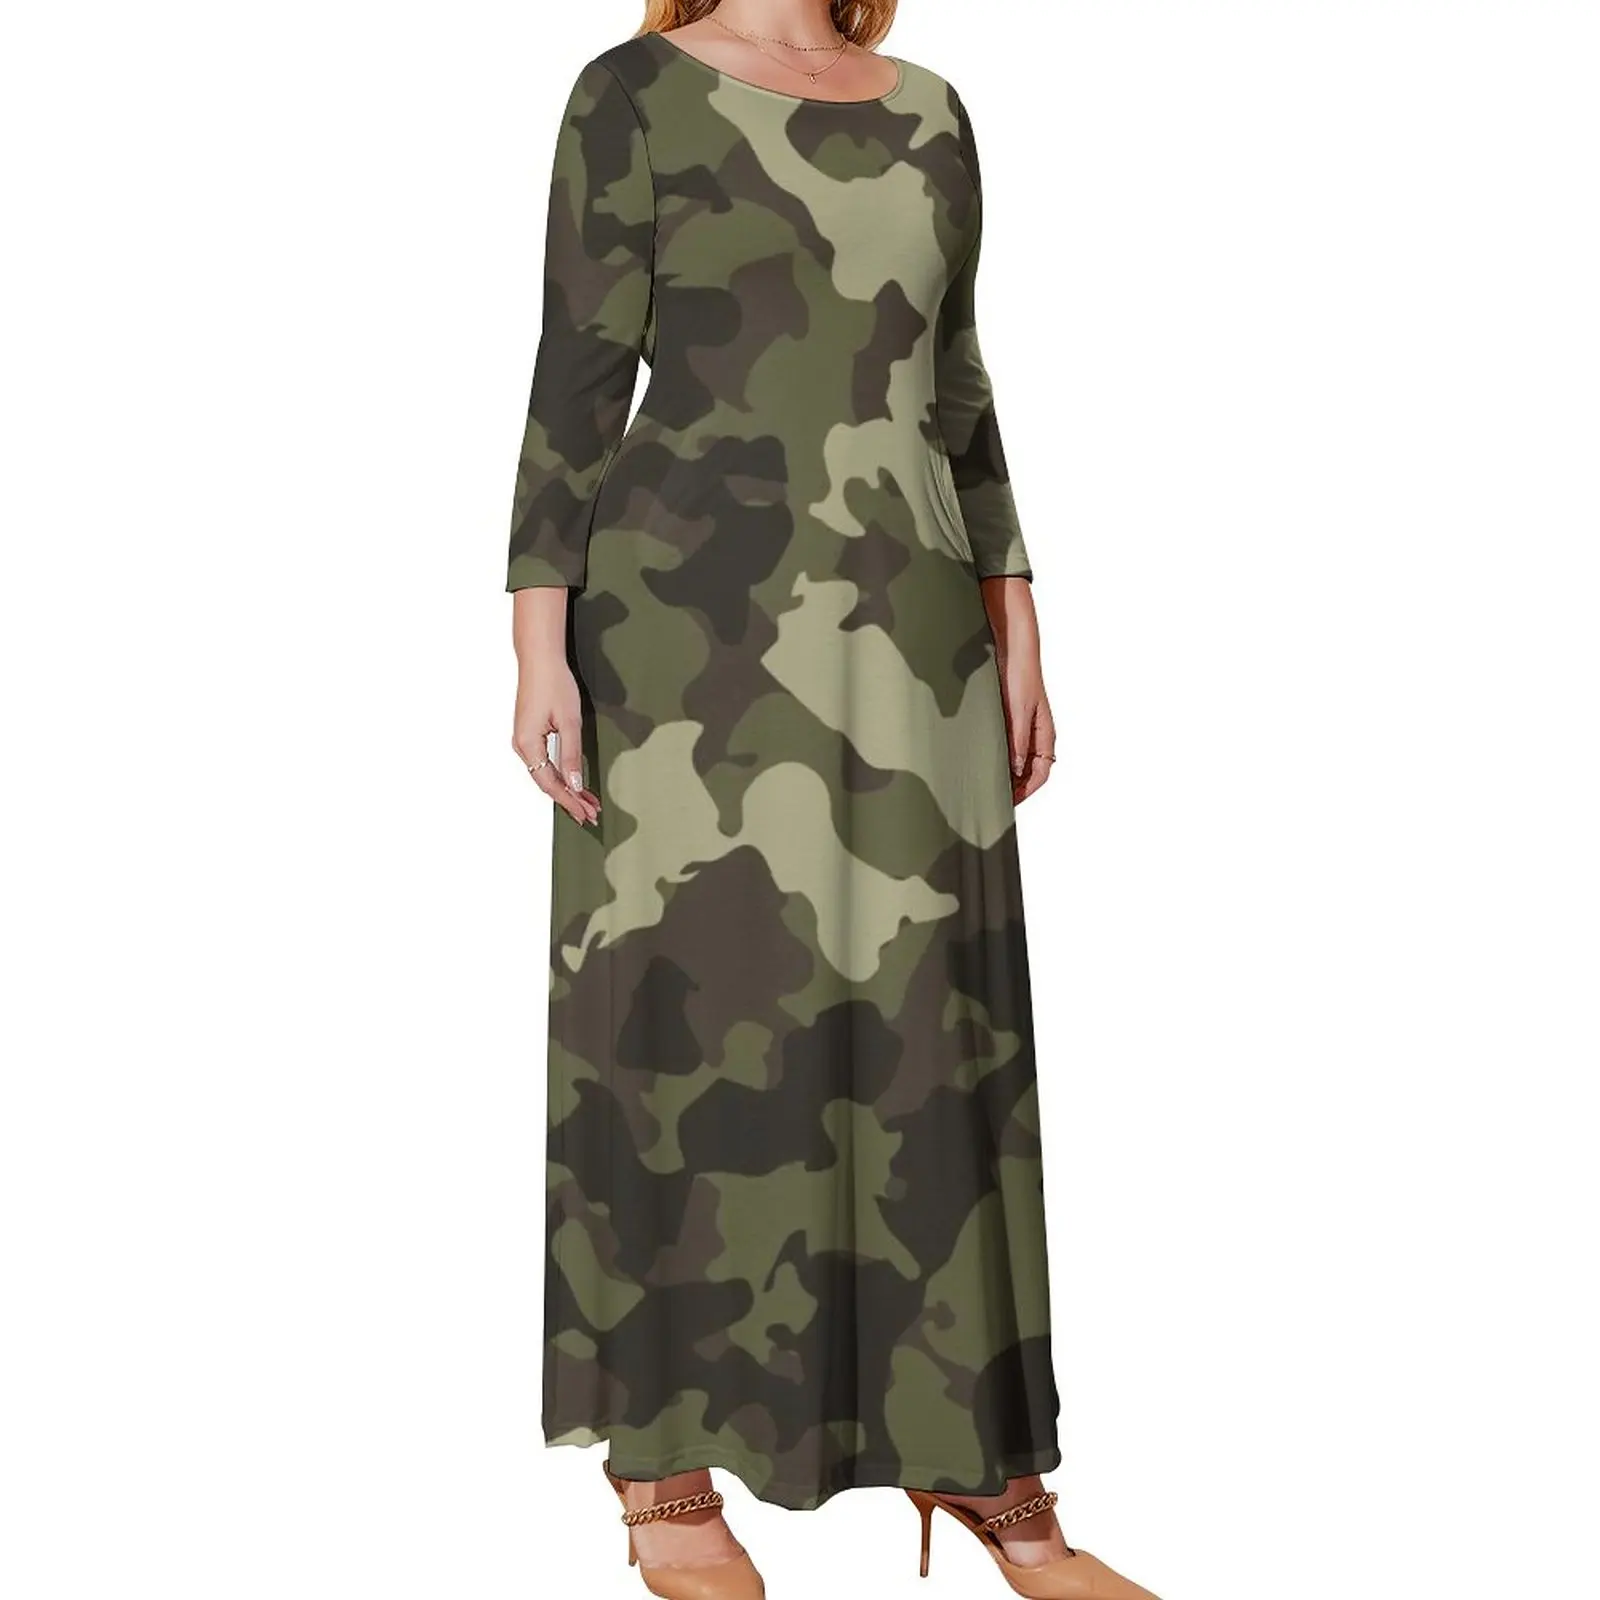 Army Camo Dress Cool Camouflage Print Bohemia Dresses Long-Sleeve Street Fashion Long Maxi Dress Sexy Clothes Plus Size 5XL